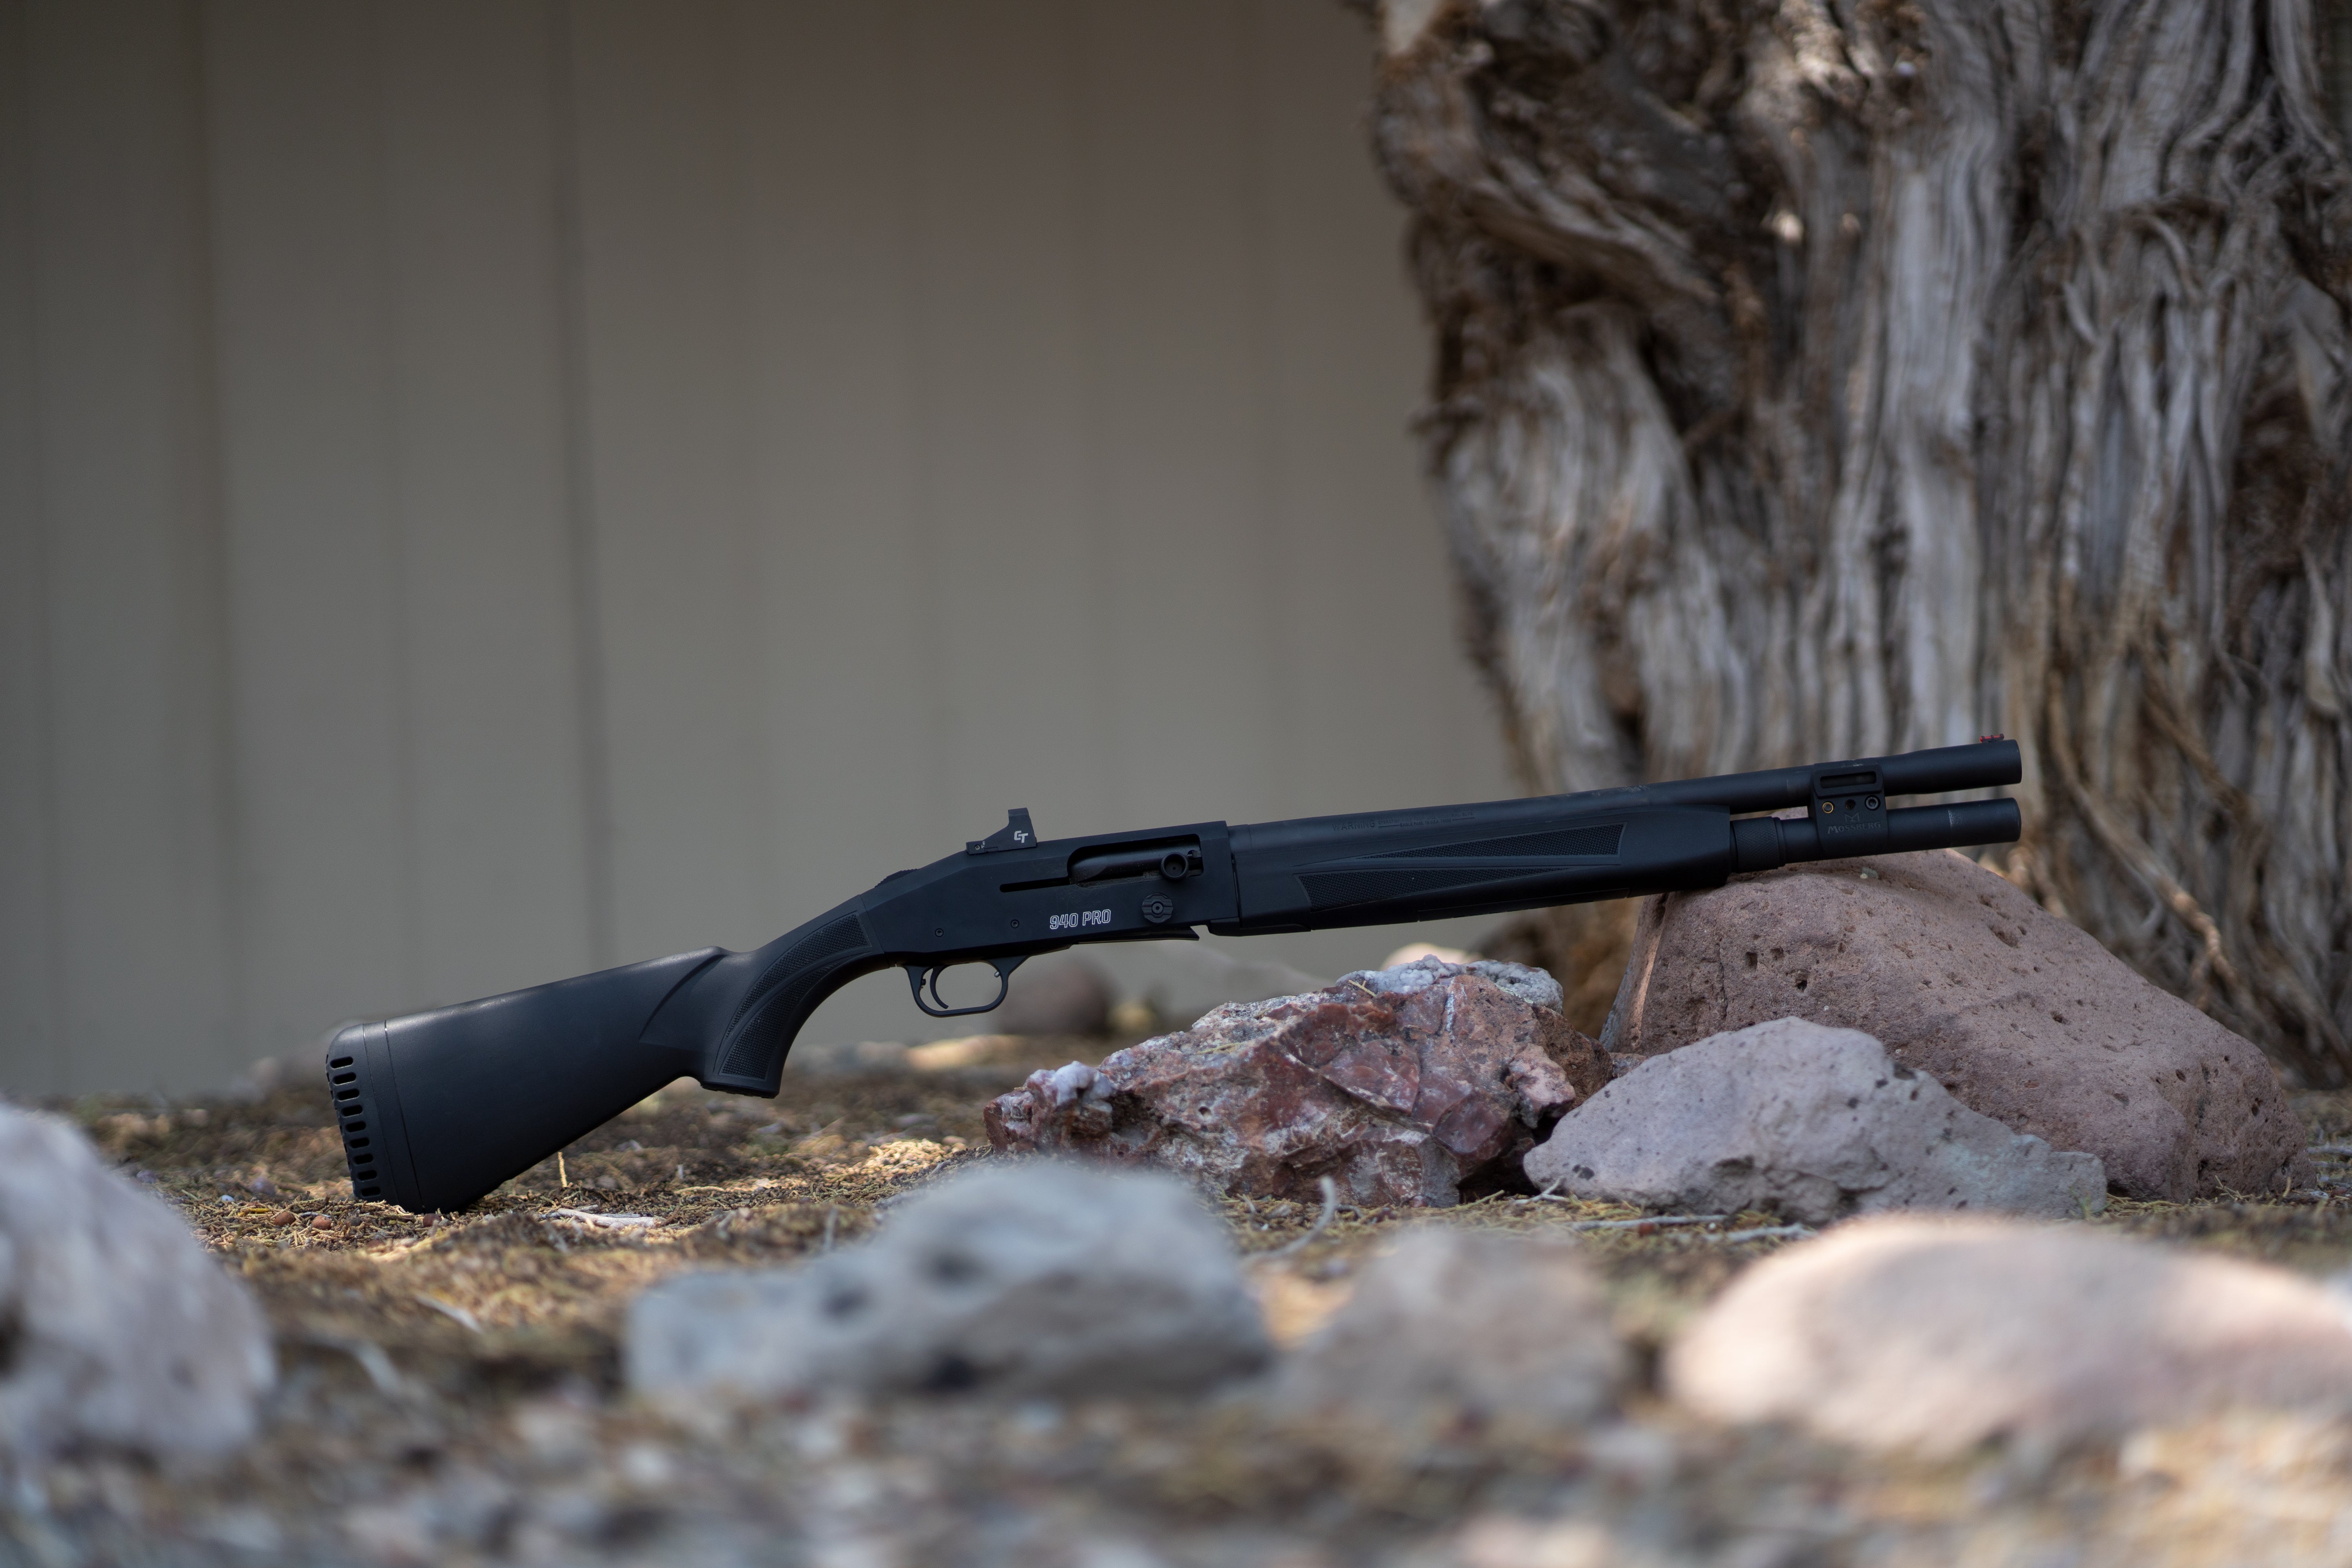 Introducing the new Mossberg 940 Pro Tactical Semi-Auto Shotgun